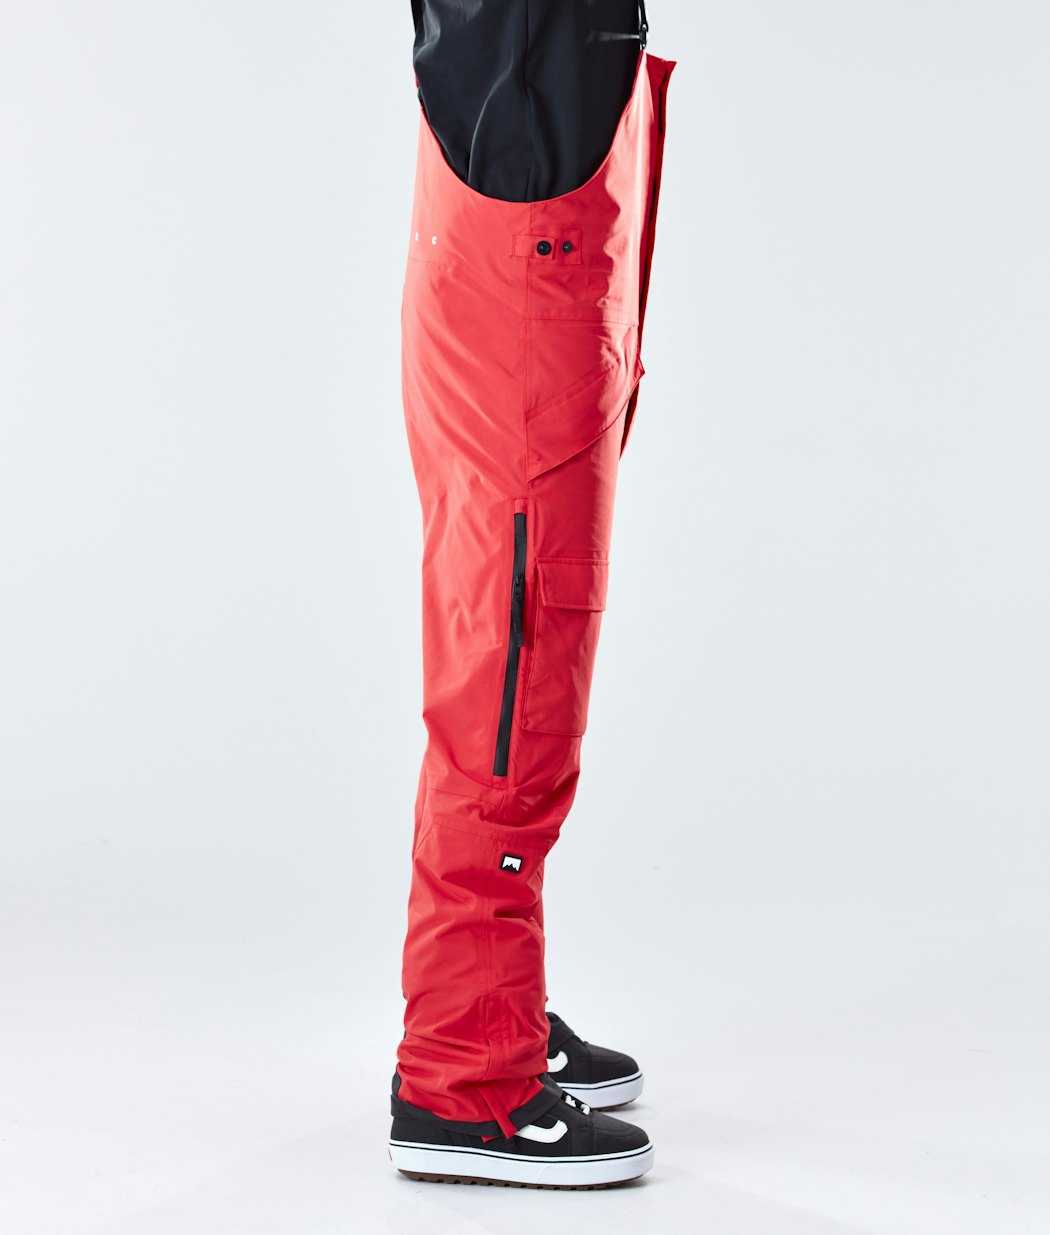 Fawk 2020 Snowboard Pants Men Red